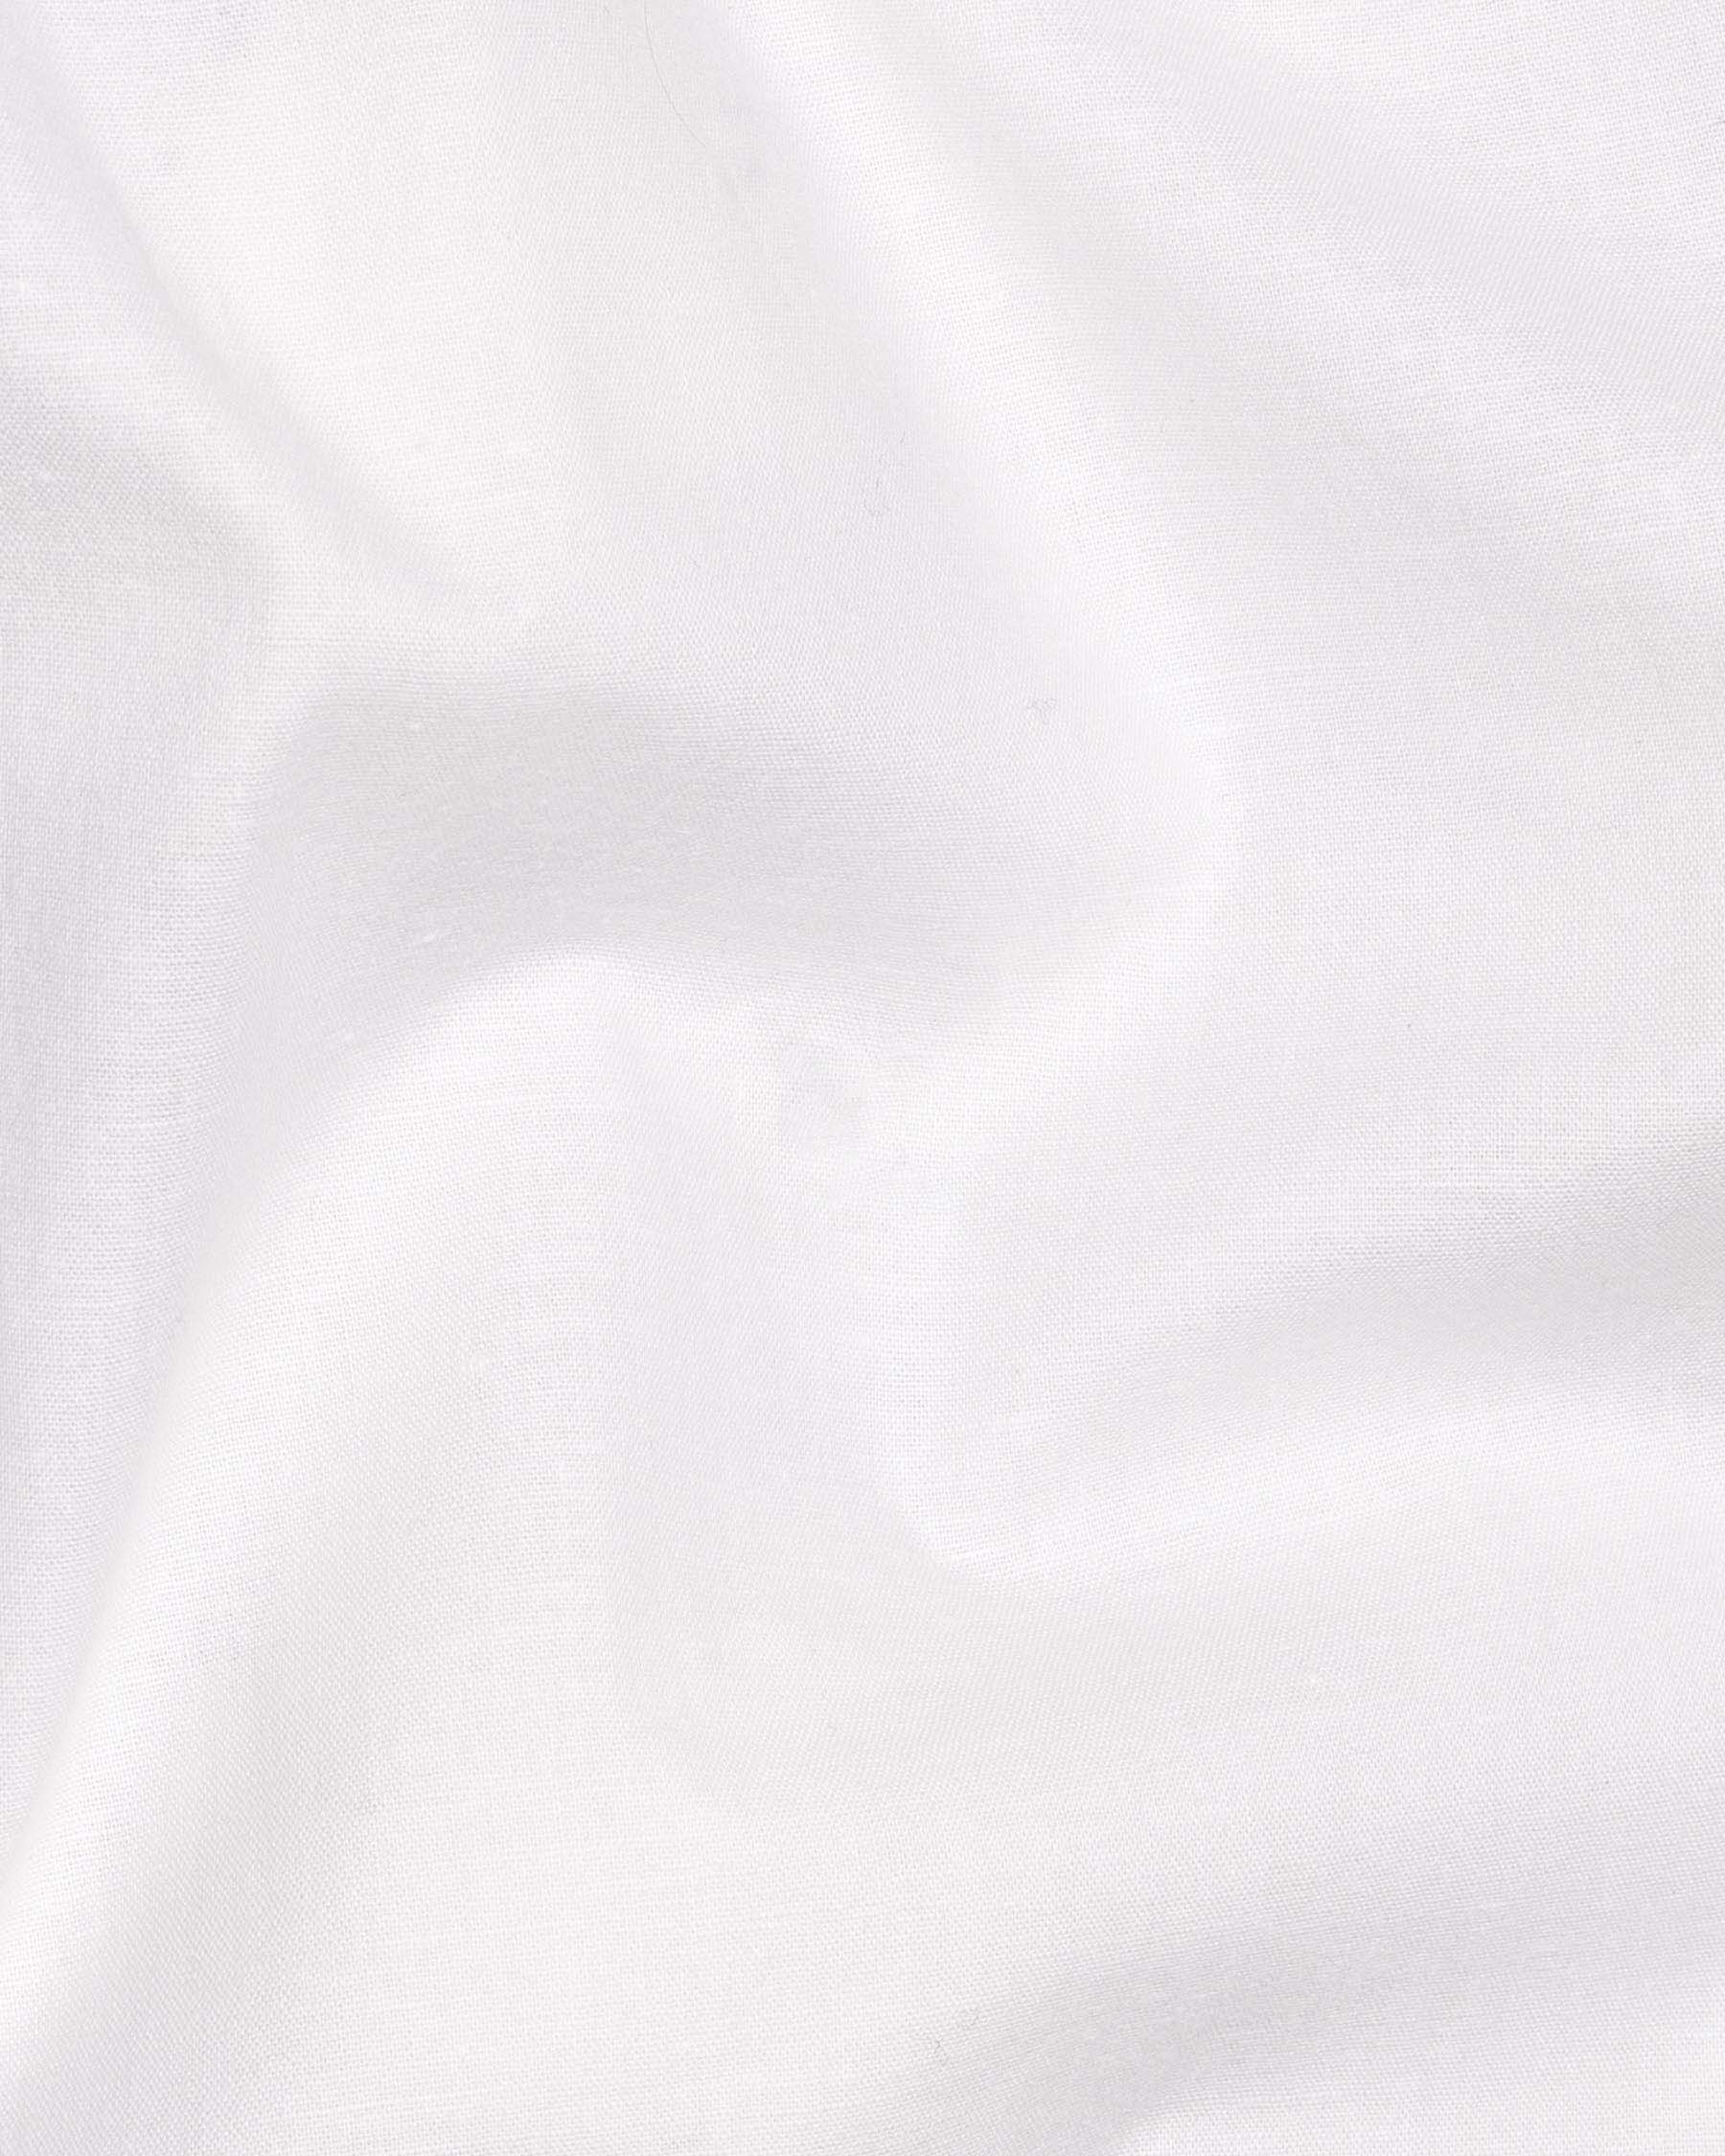 Bright White Twill Premium Cotton Shirt 5995-CA-38, 5995-CA-H-38, 5995-CA-39, 5995-CA-H-39, 5995-CA-40, 5995-CA-H-40, 5995-CA-42, 5995-CA-H-42, 5995-CA-44, 5995-CA-H-44, 5995-CA-46, 5995-CA-H-46, 5995-CA-48, 5995-CA-H-48, 5995-CA-50, 5995-CA-H-50, 5995-CA-52, 5995-CA-H-52